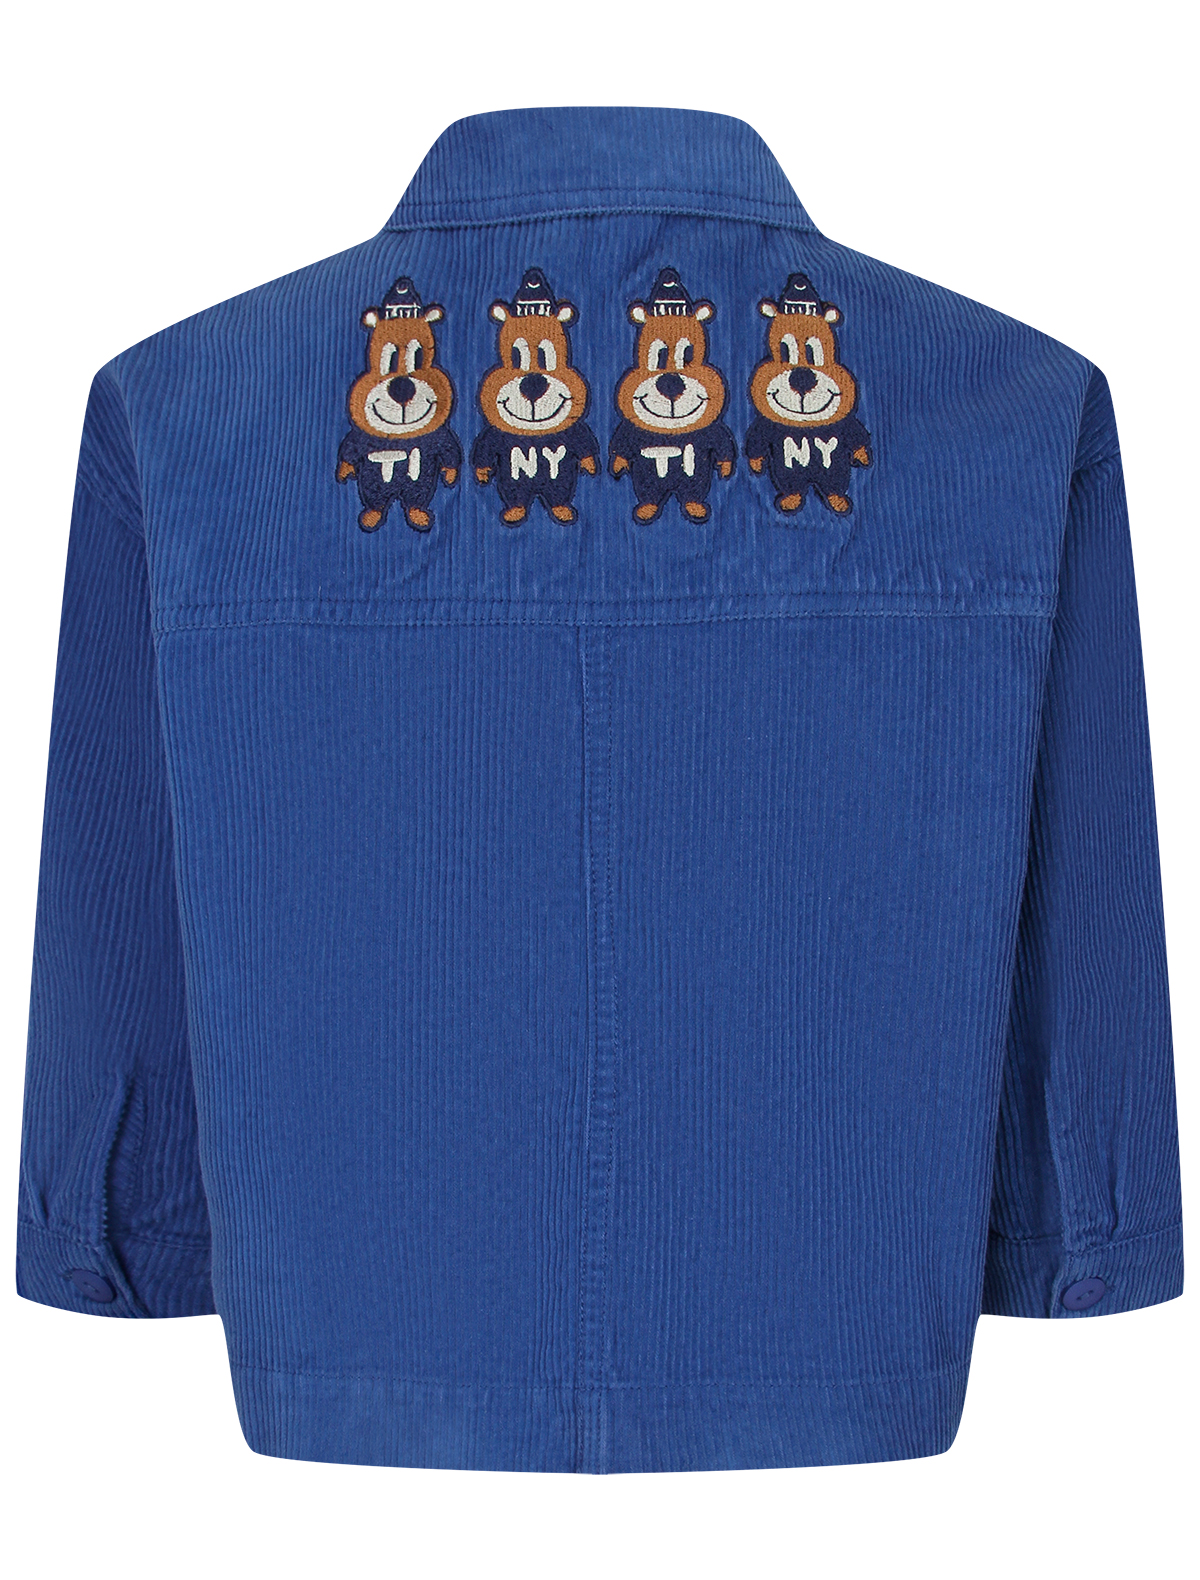 Куртка TINYCOTTONS 2618729, цвет синий, размер 6 1074519384615 - фото 3